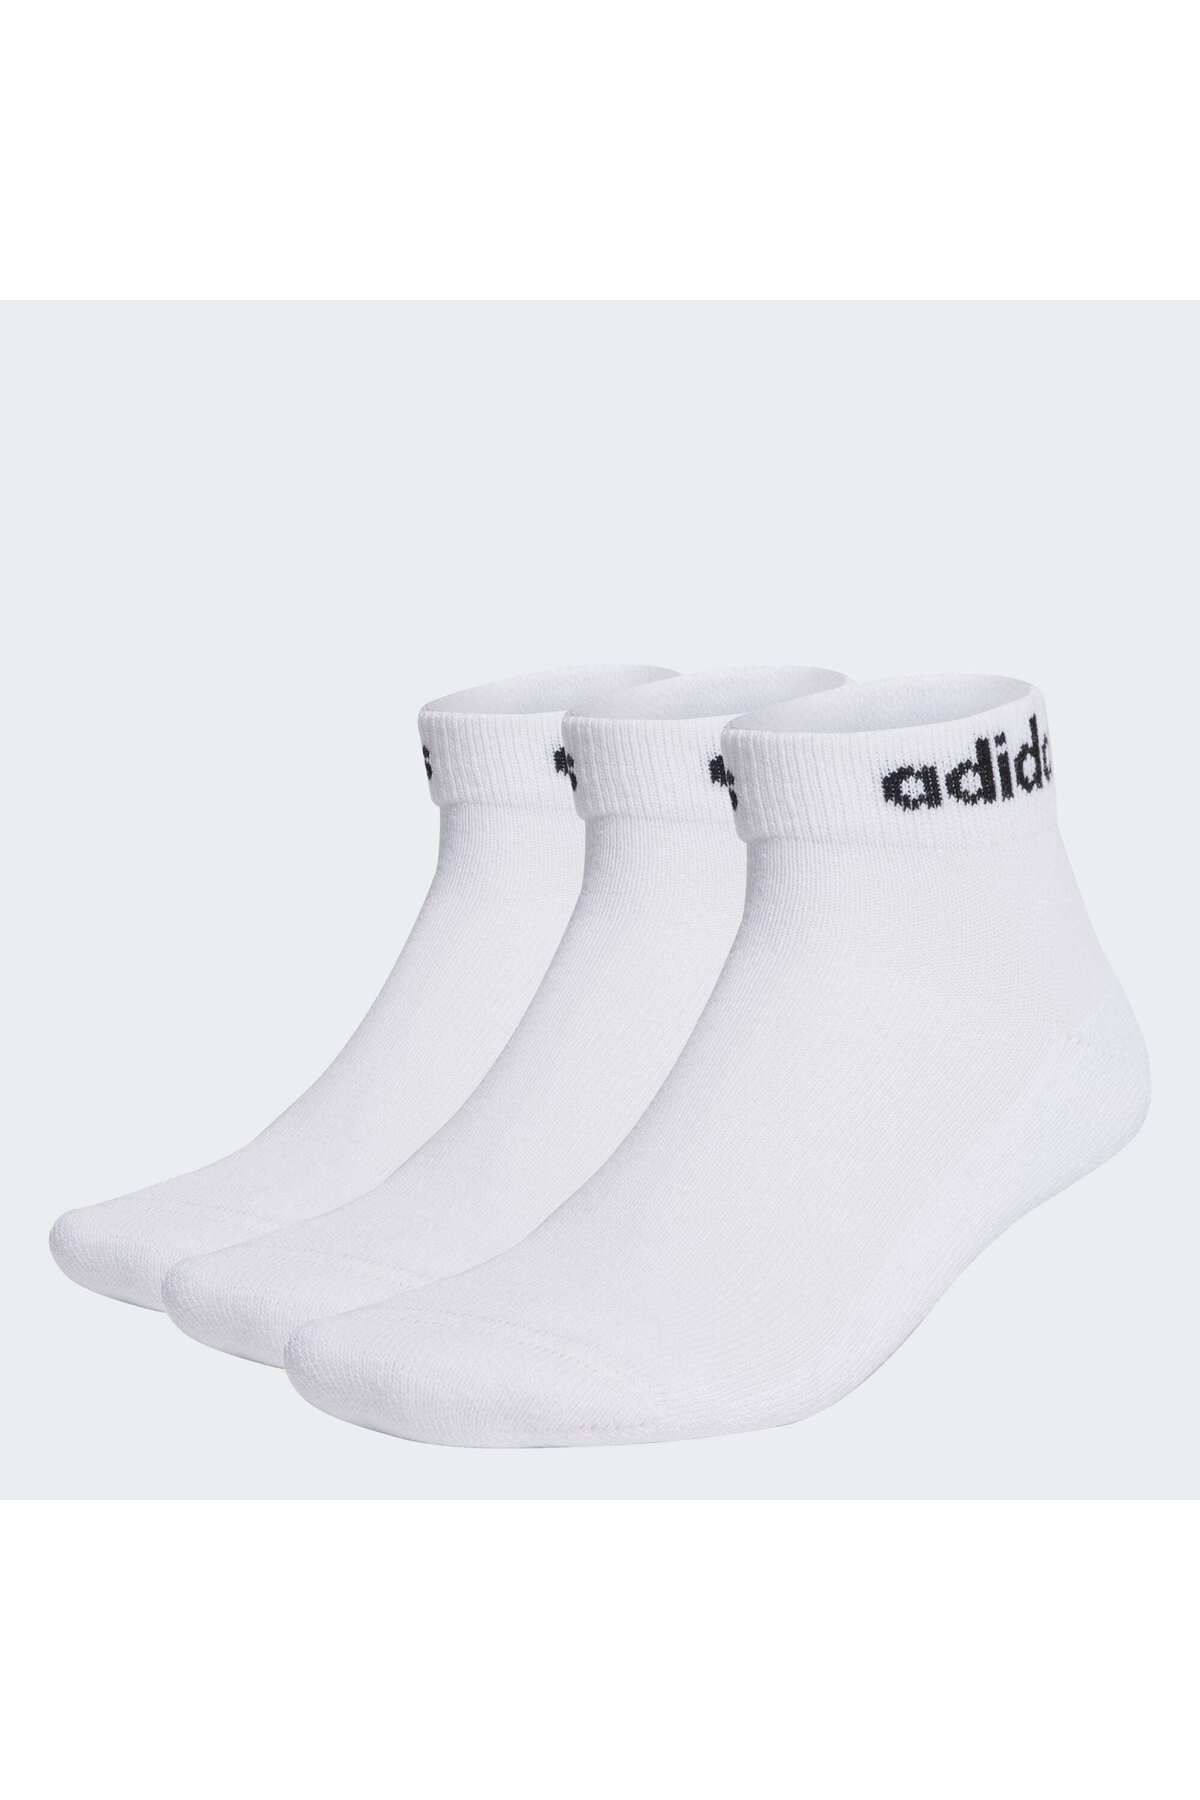 adidas Linear Ankle Socks Cushioned Çorap - 3 Çift